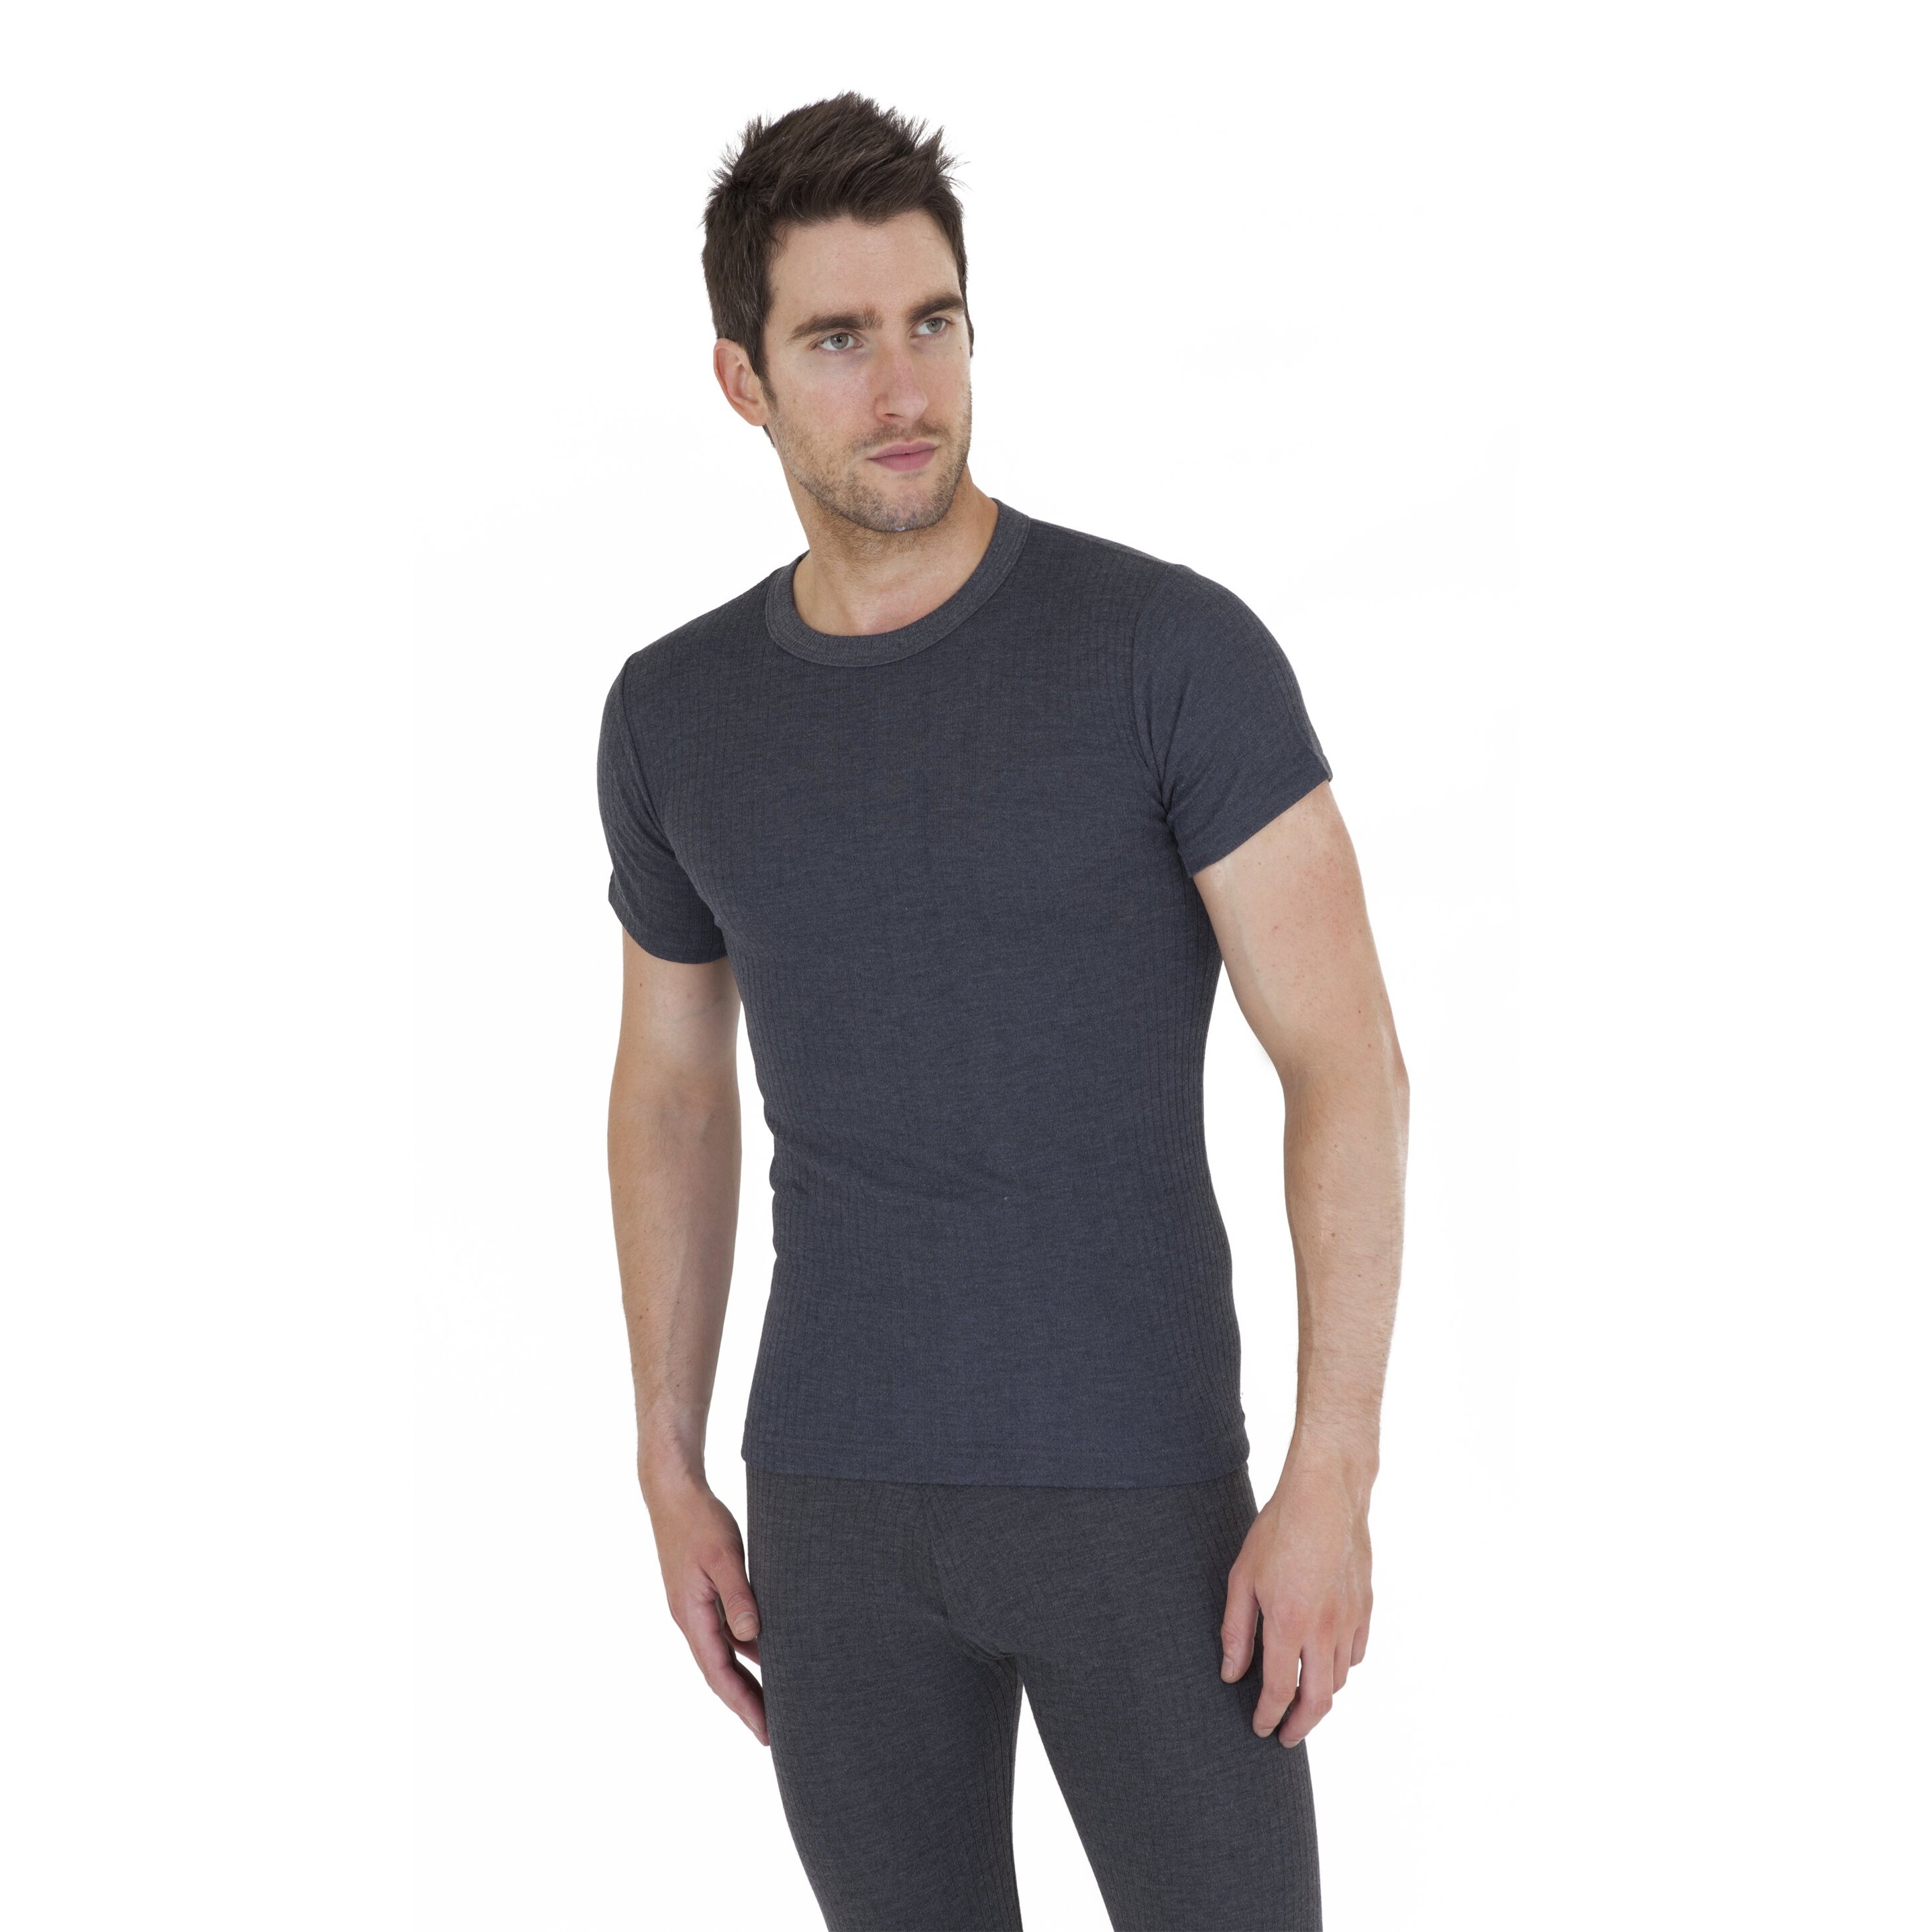 T-shirt Térmica Universal Textiles Modelo Poliviscose - gris-oscuro - 